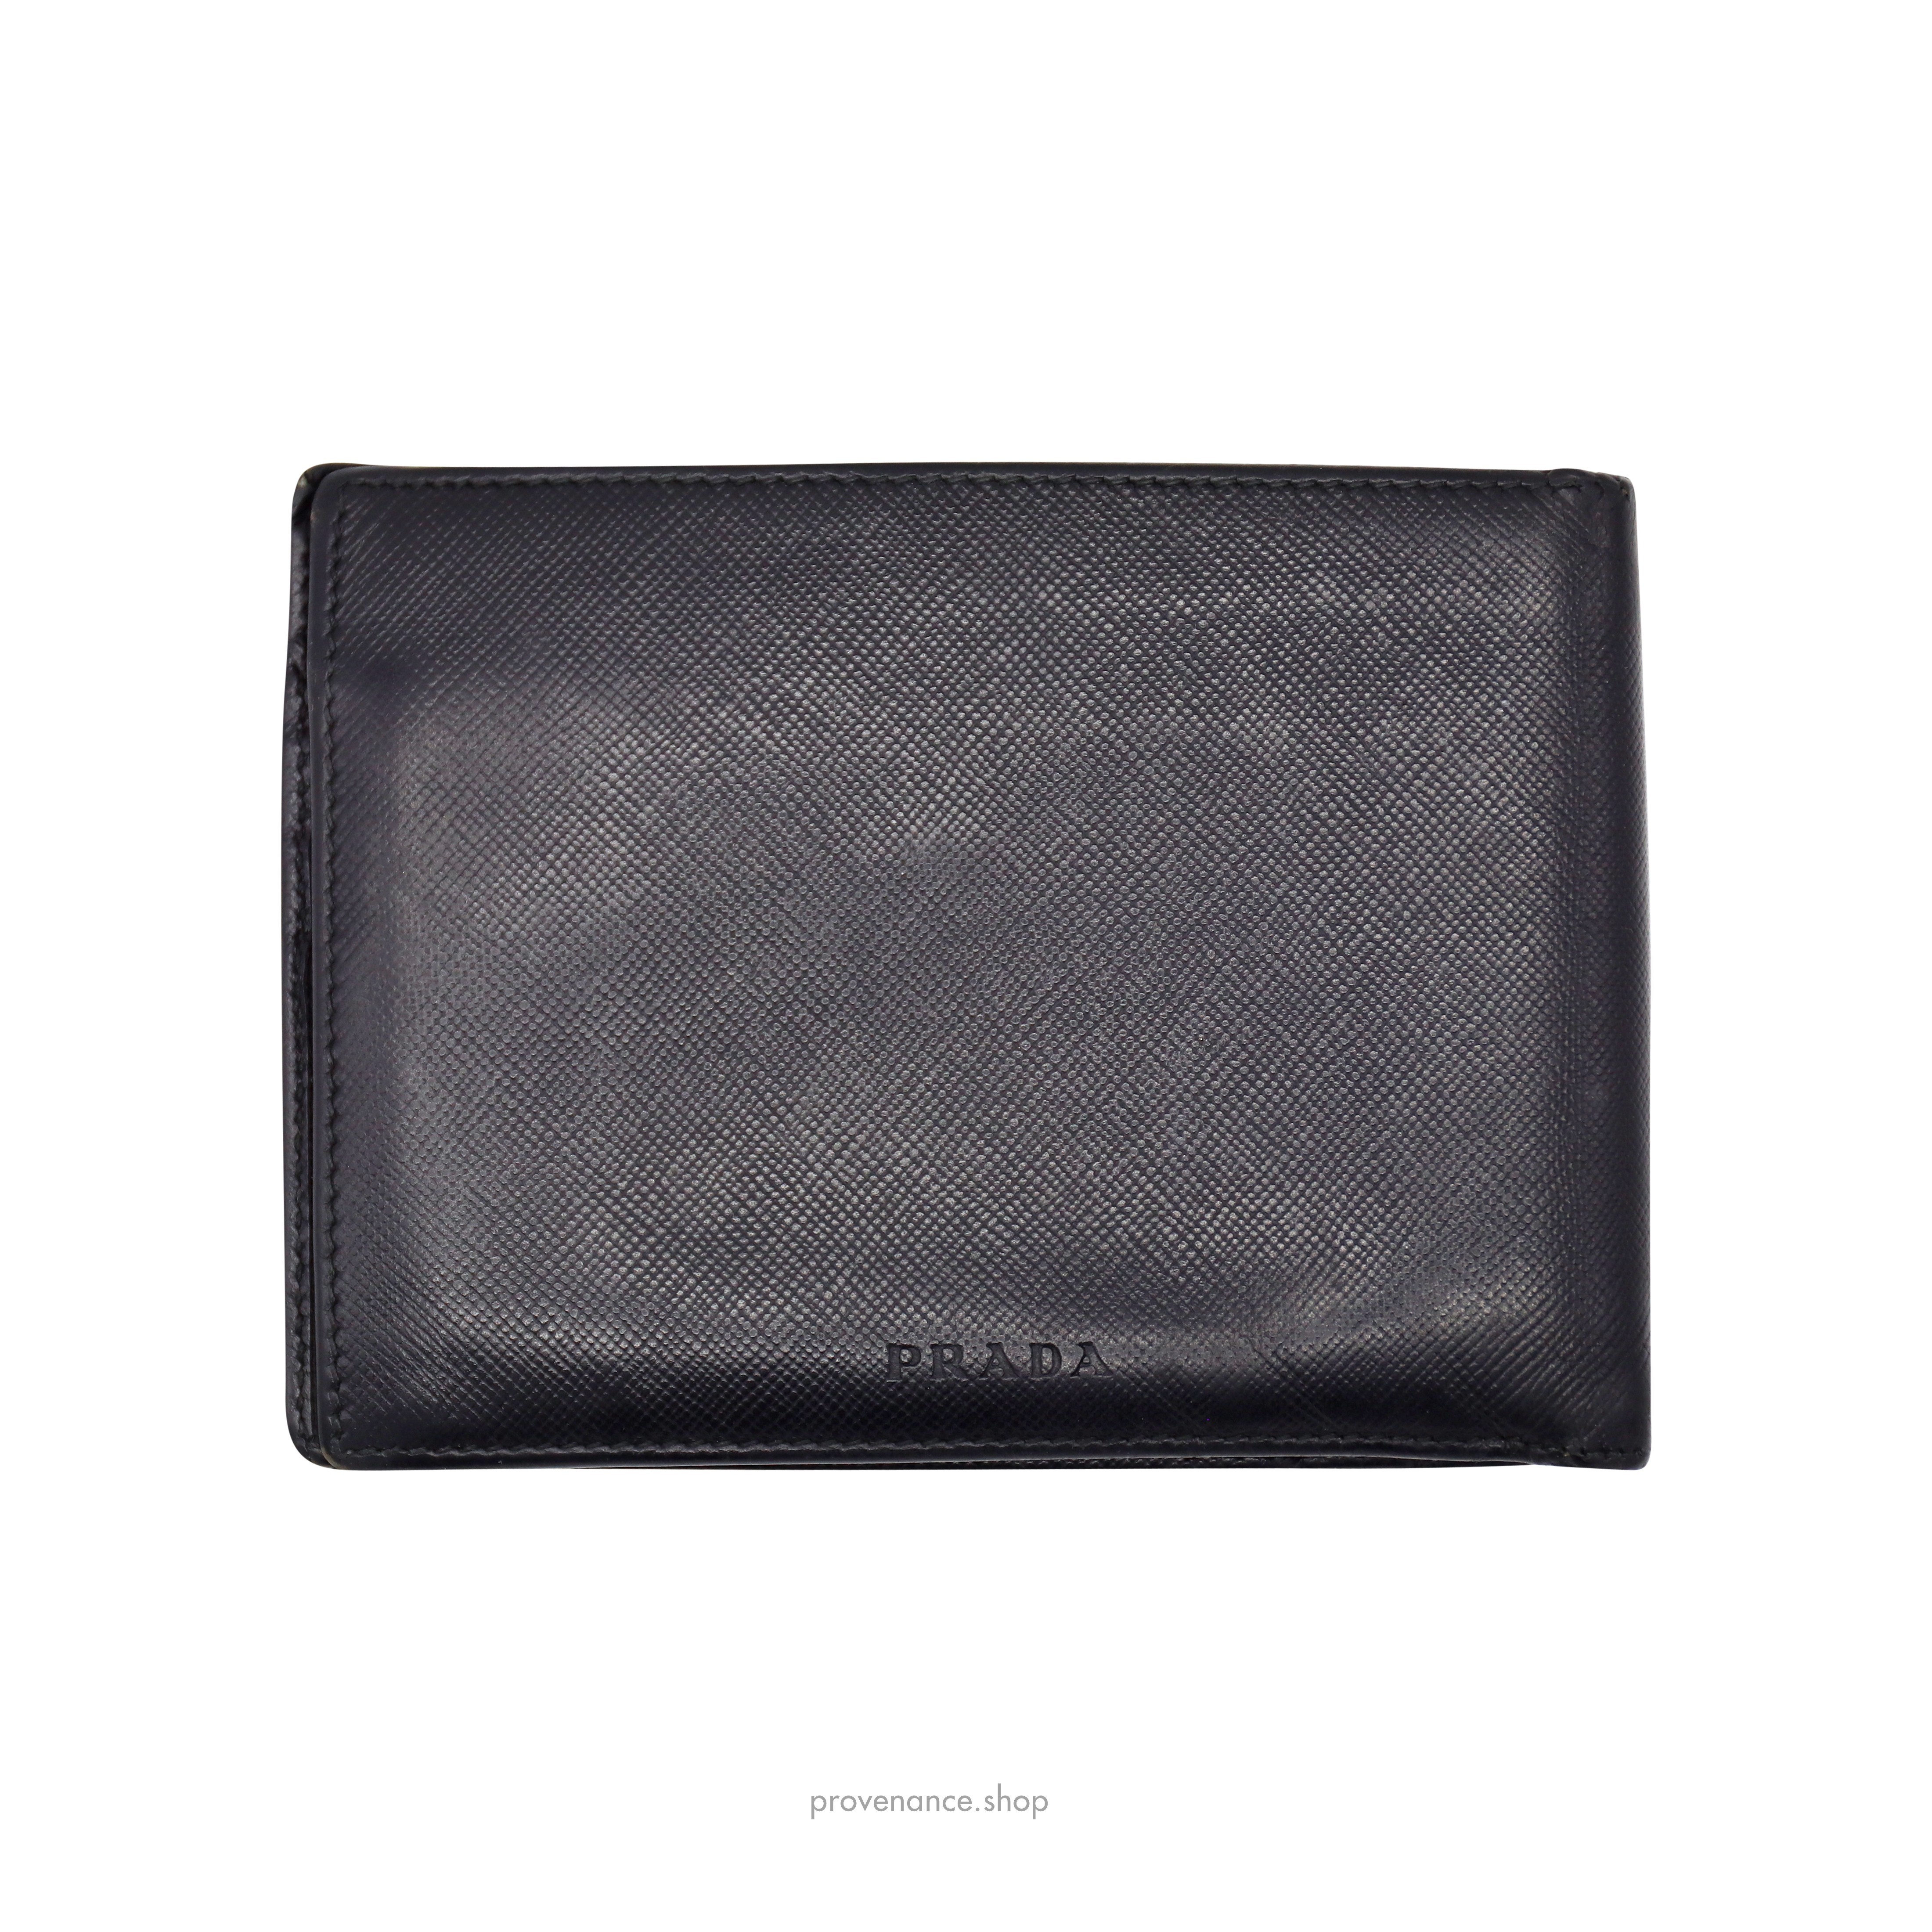 Prada Bifold Wallet - Nero Saffiano Leather - 1